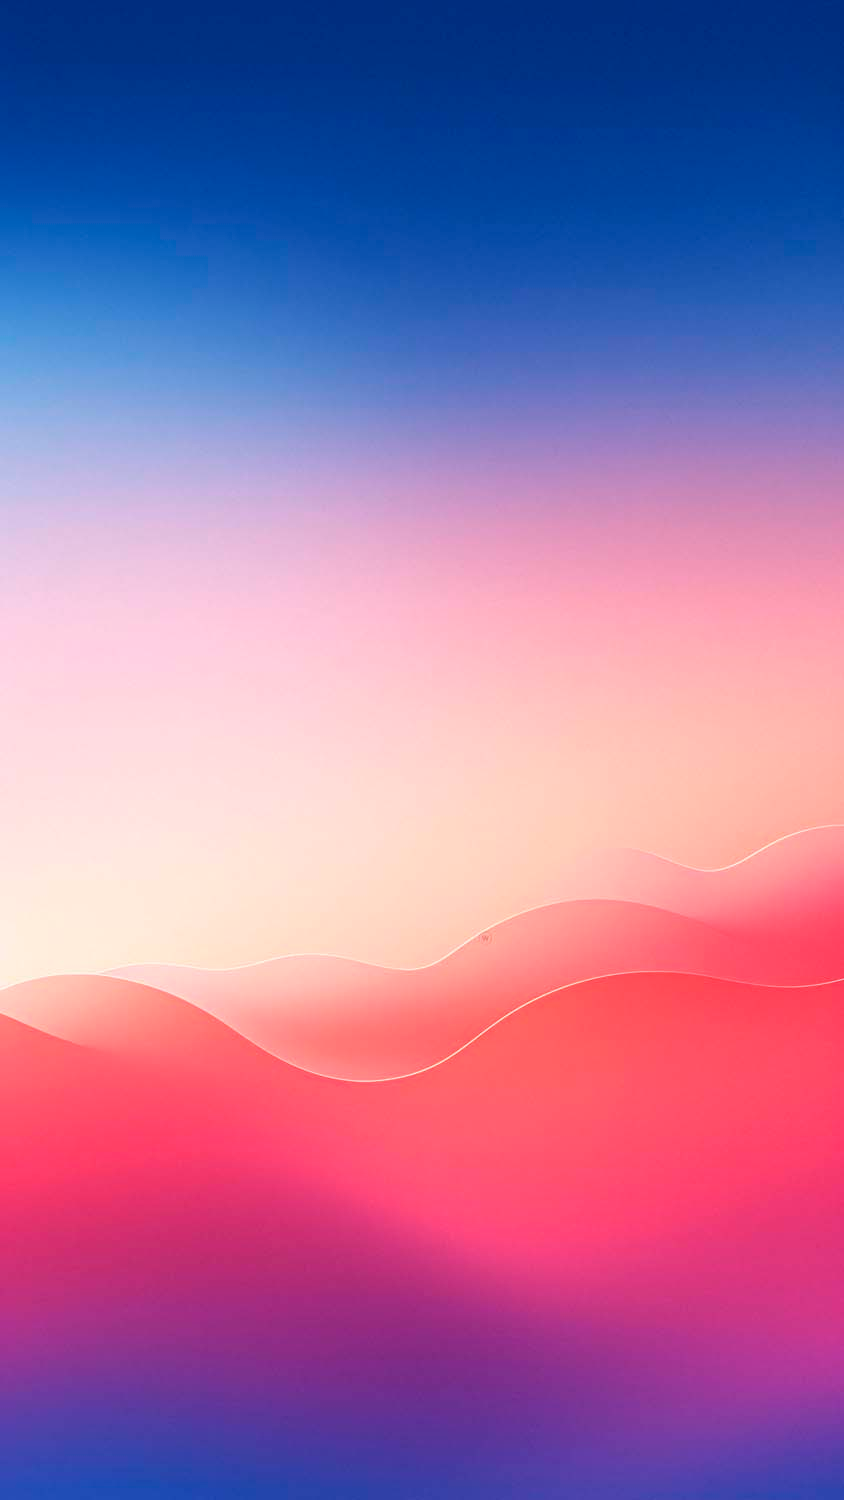 Abstract Gradient Waves iPhone Wallpaper 4K  iPhone Wallpapers